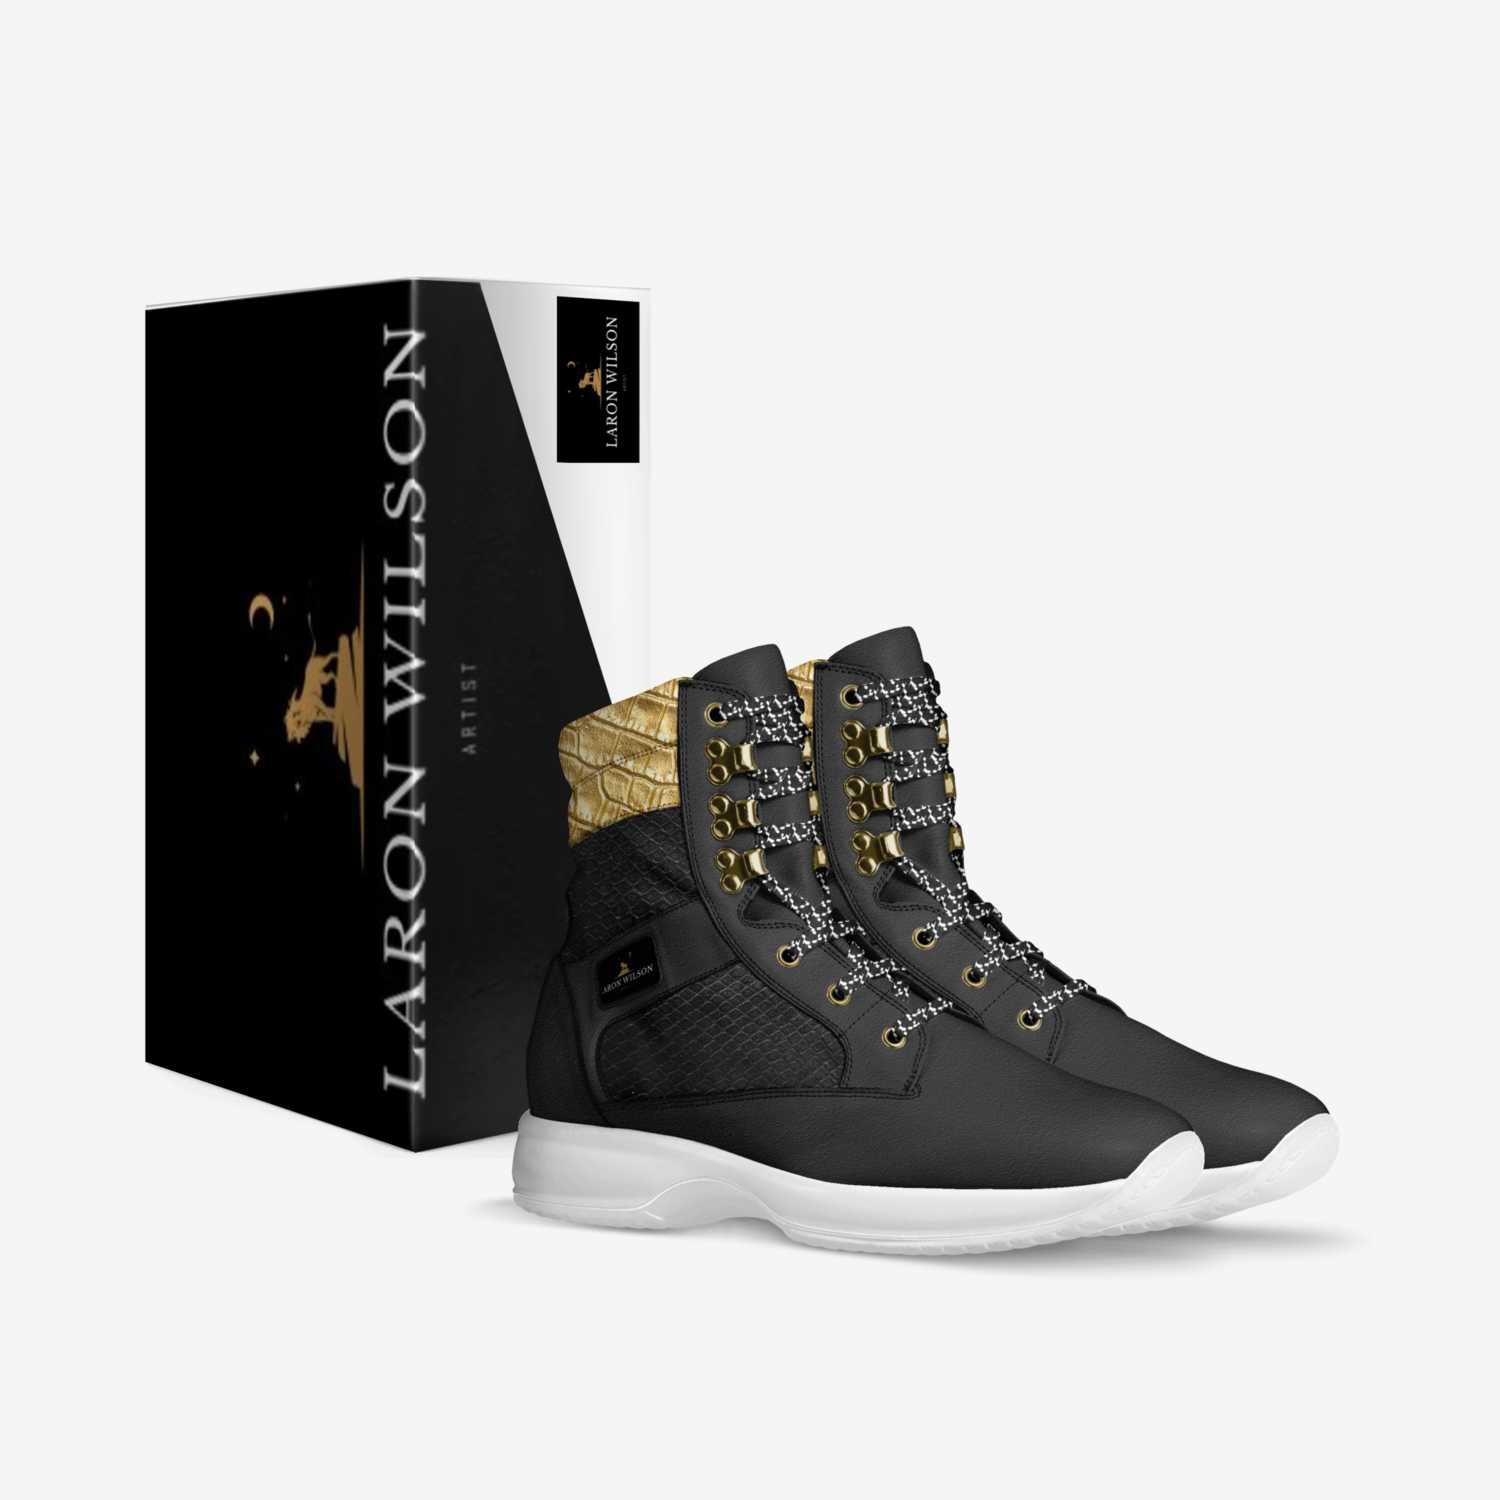 Laron Wilson custom made in Italy shoes by Laron Wilson | Box view